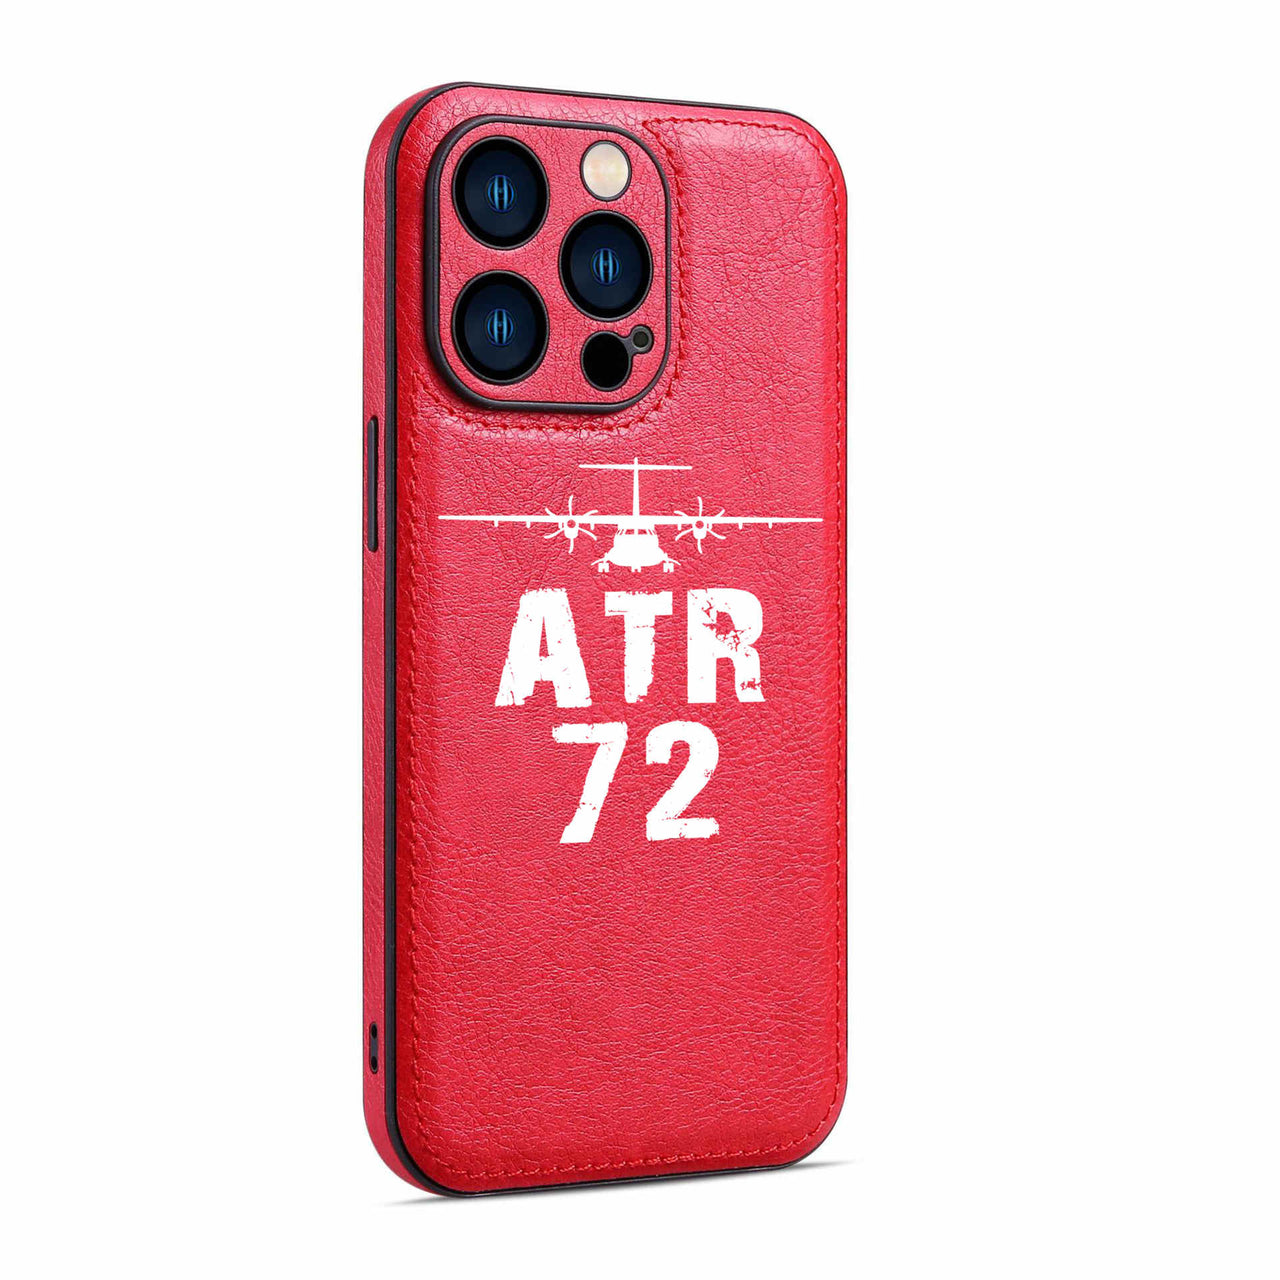 ATR-72 & Plane Designed Leather iPhone Cases